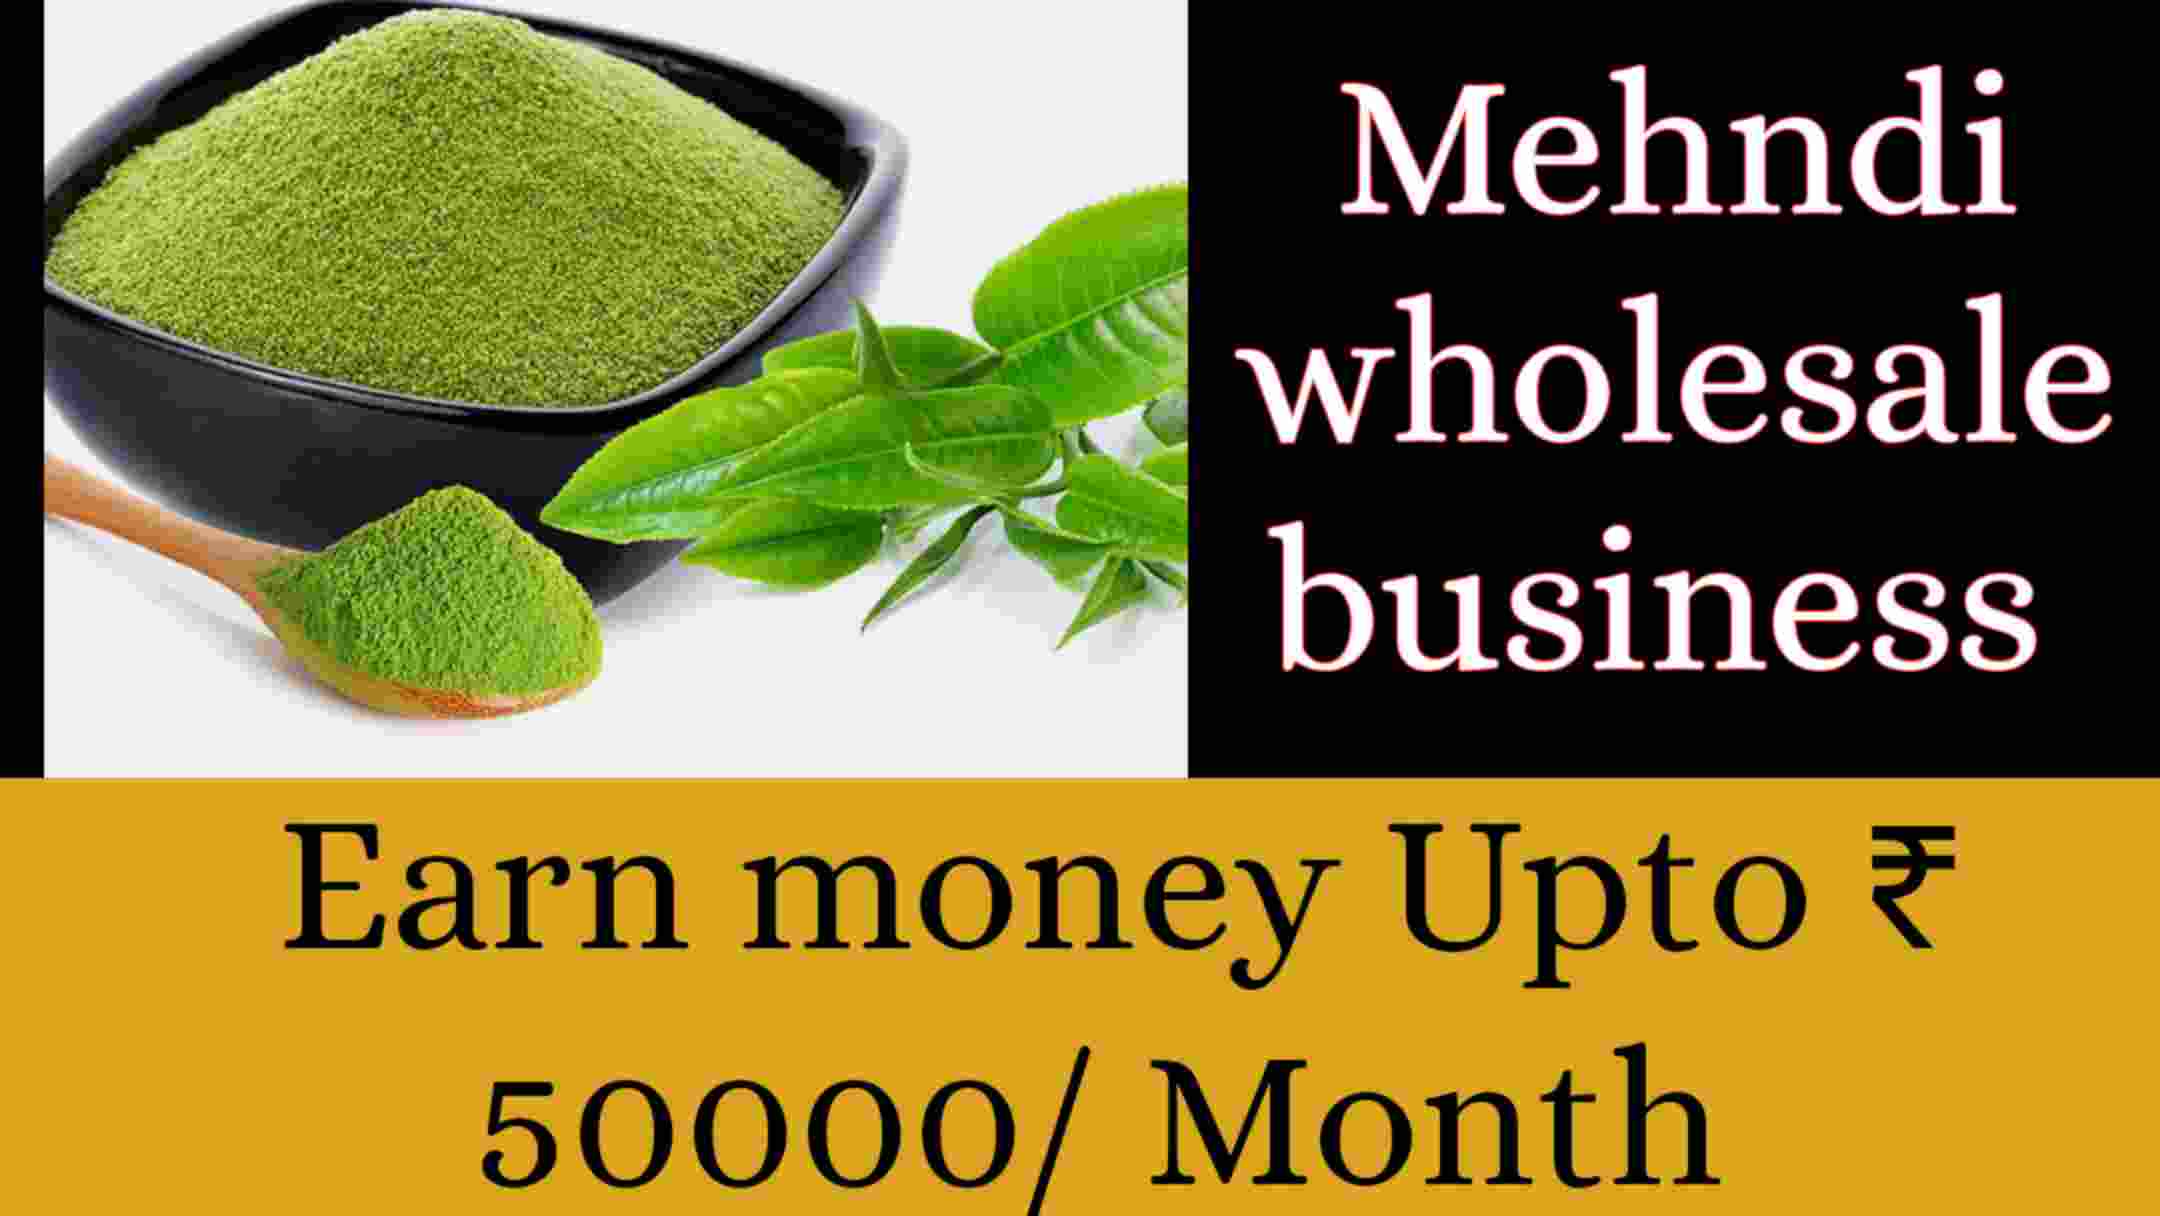 Mehndi Wholesale Business/ Where to Buy the Cheapest Mehndi/